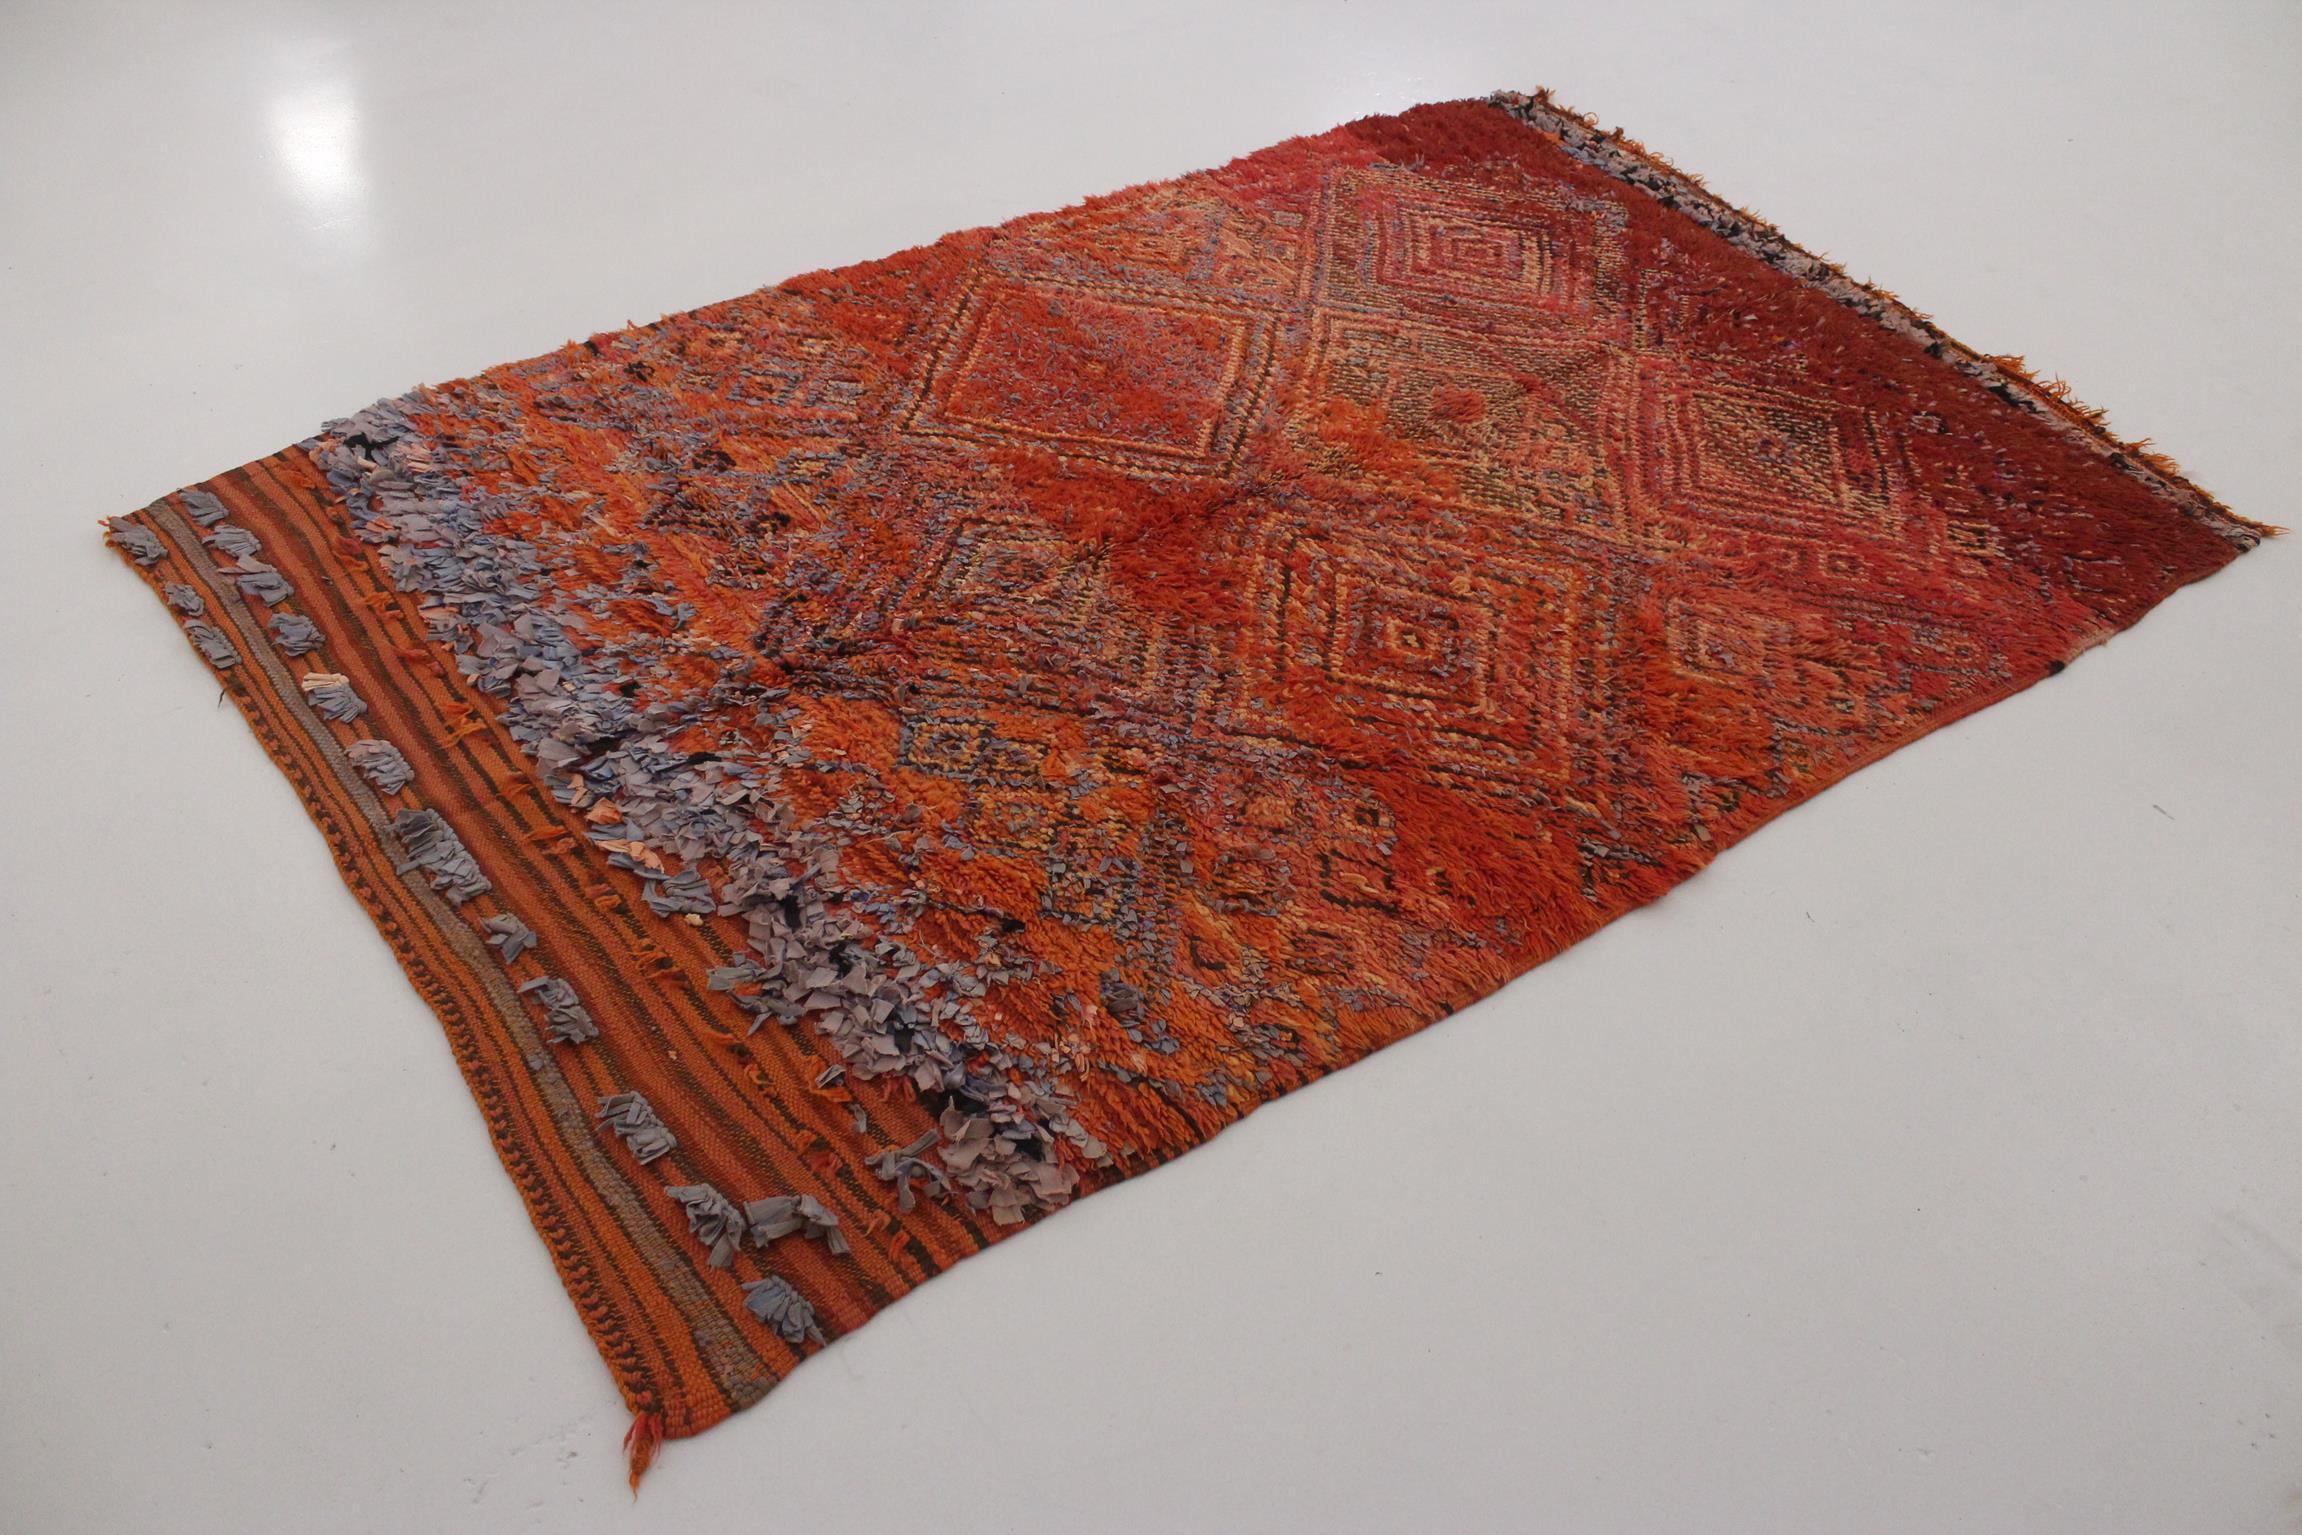 Hand-Woven Vintage Moroccan Beni Mguild rug - Orange/red/lavender - 5x7.8feet / 153x240cm